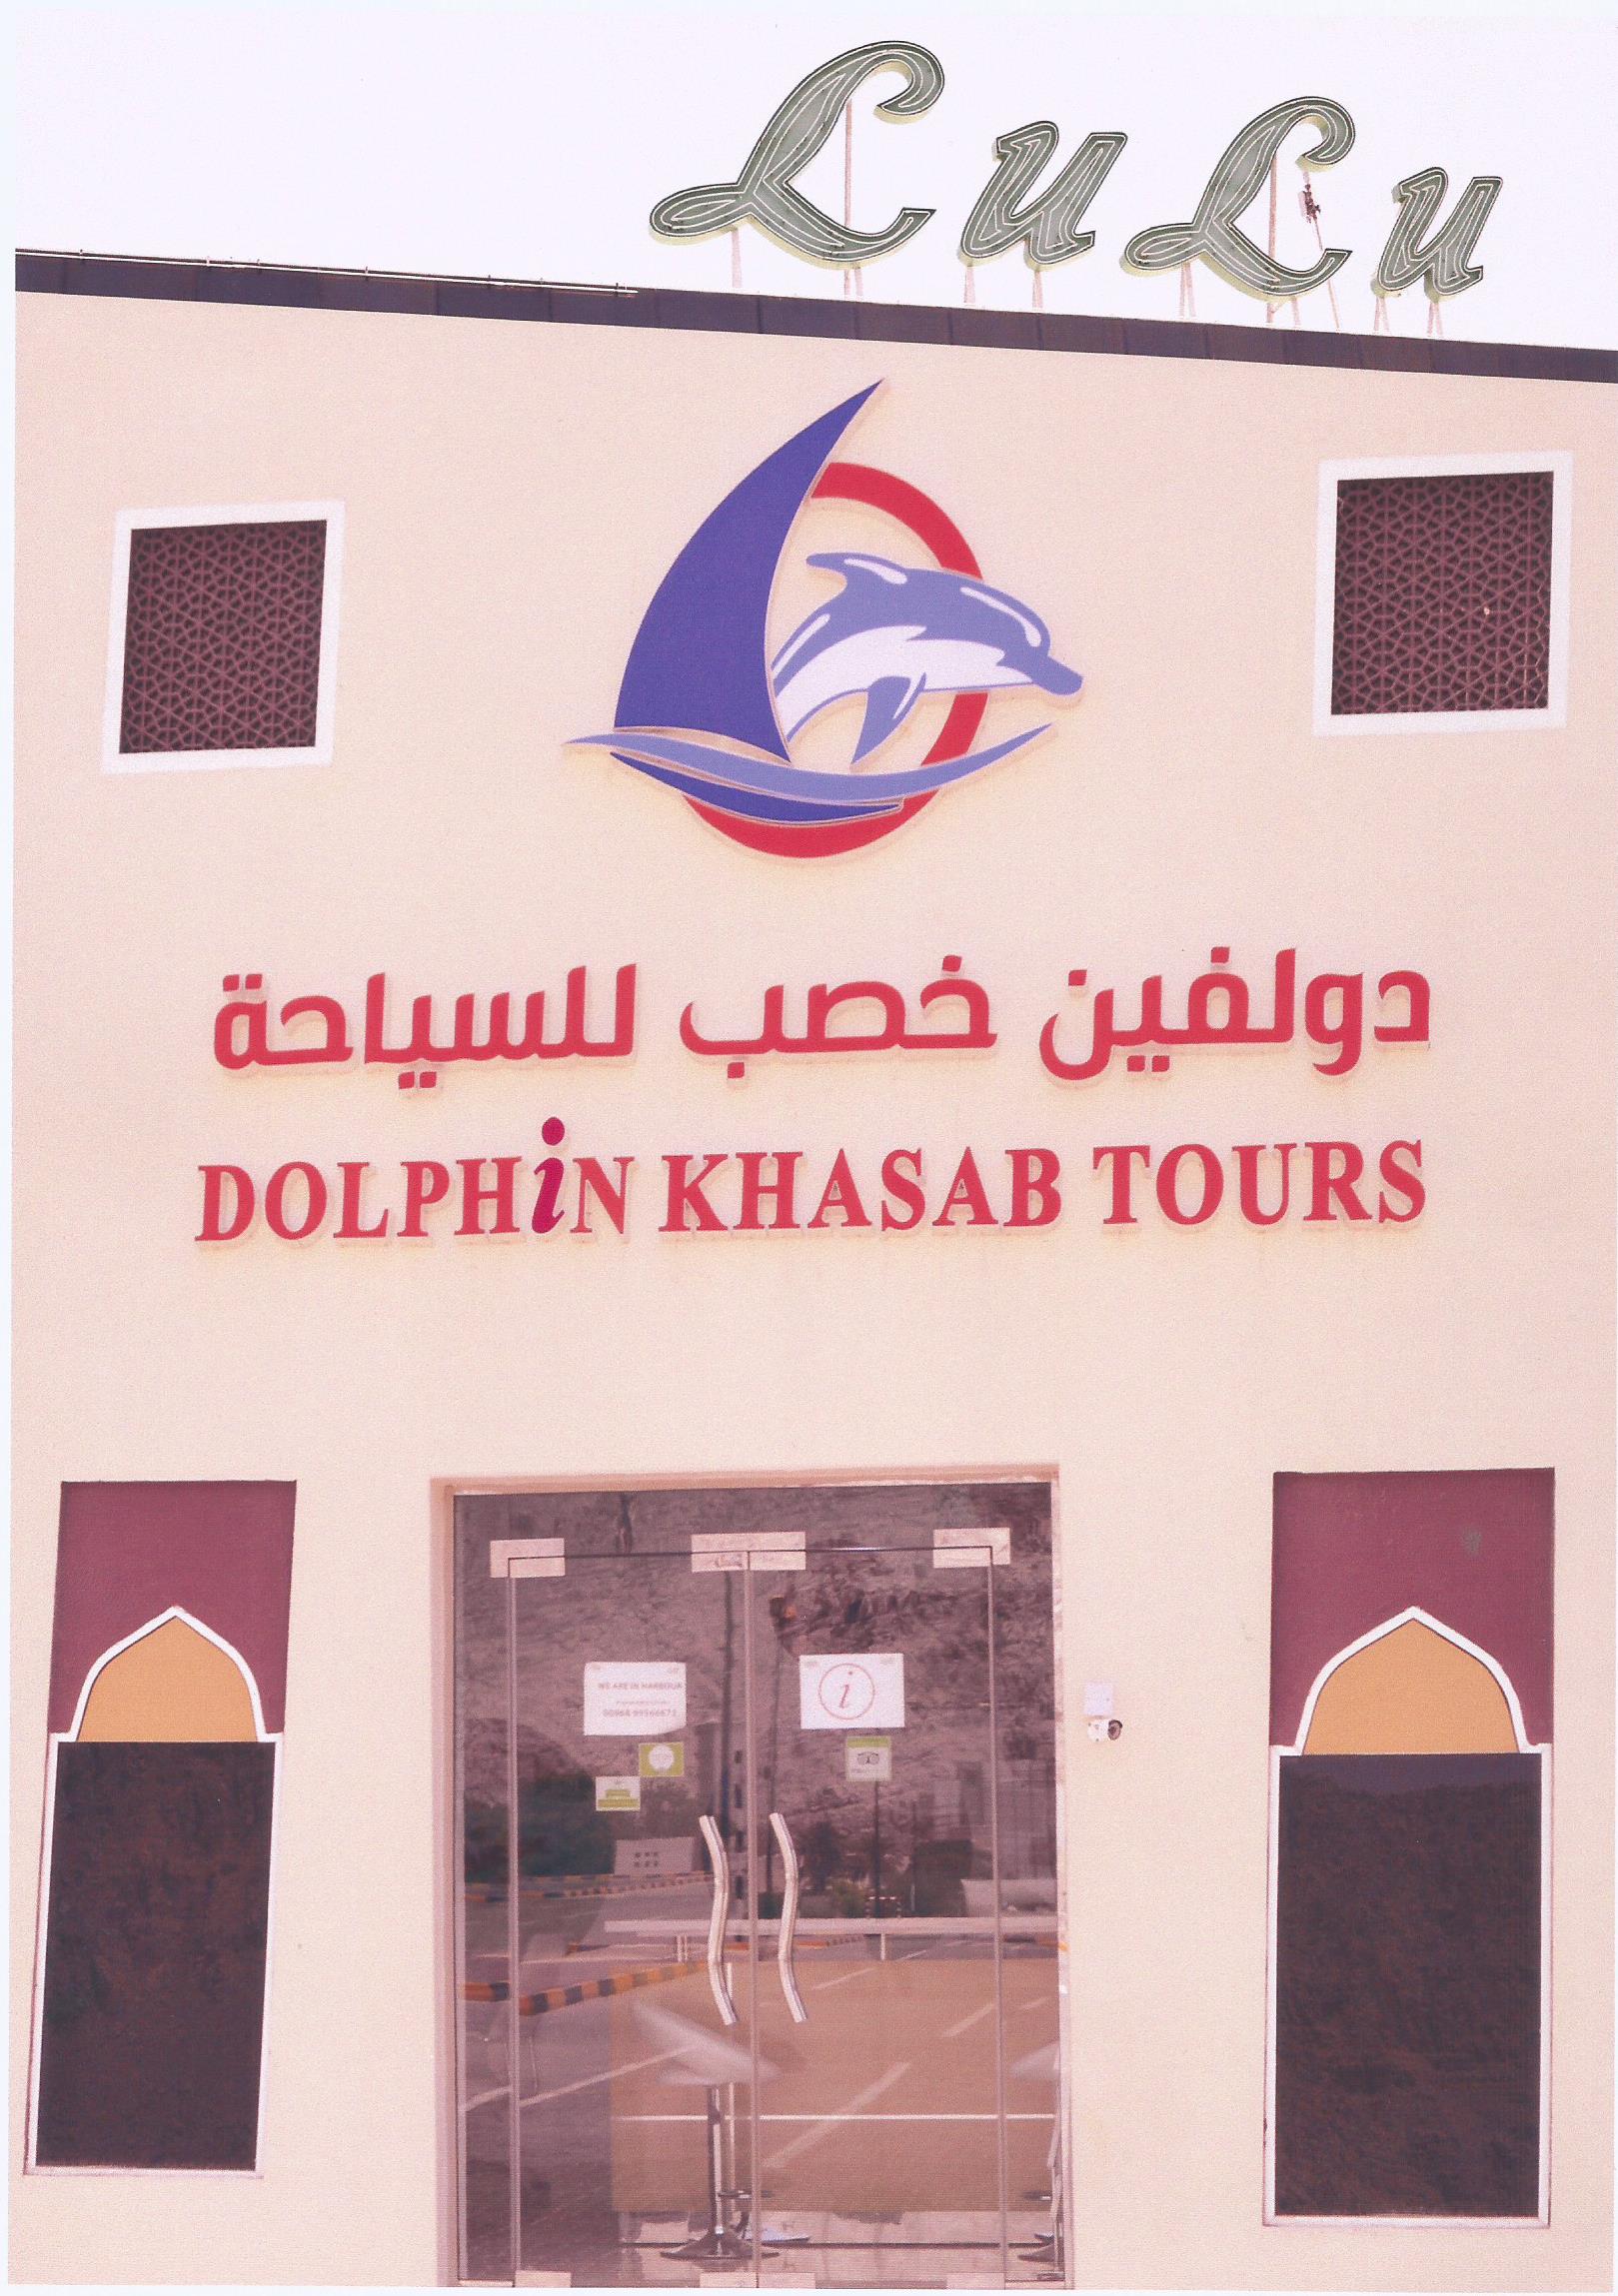 Dolphin Khasab tours